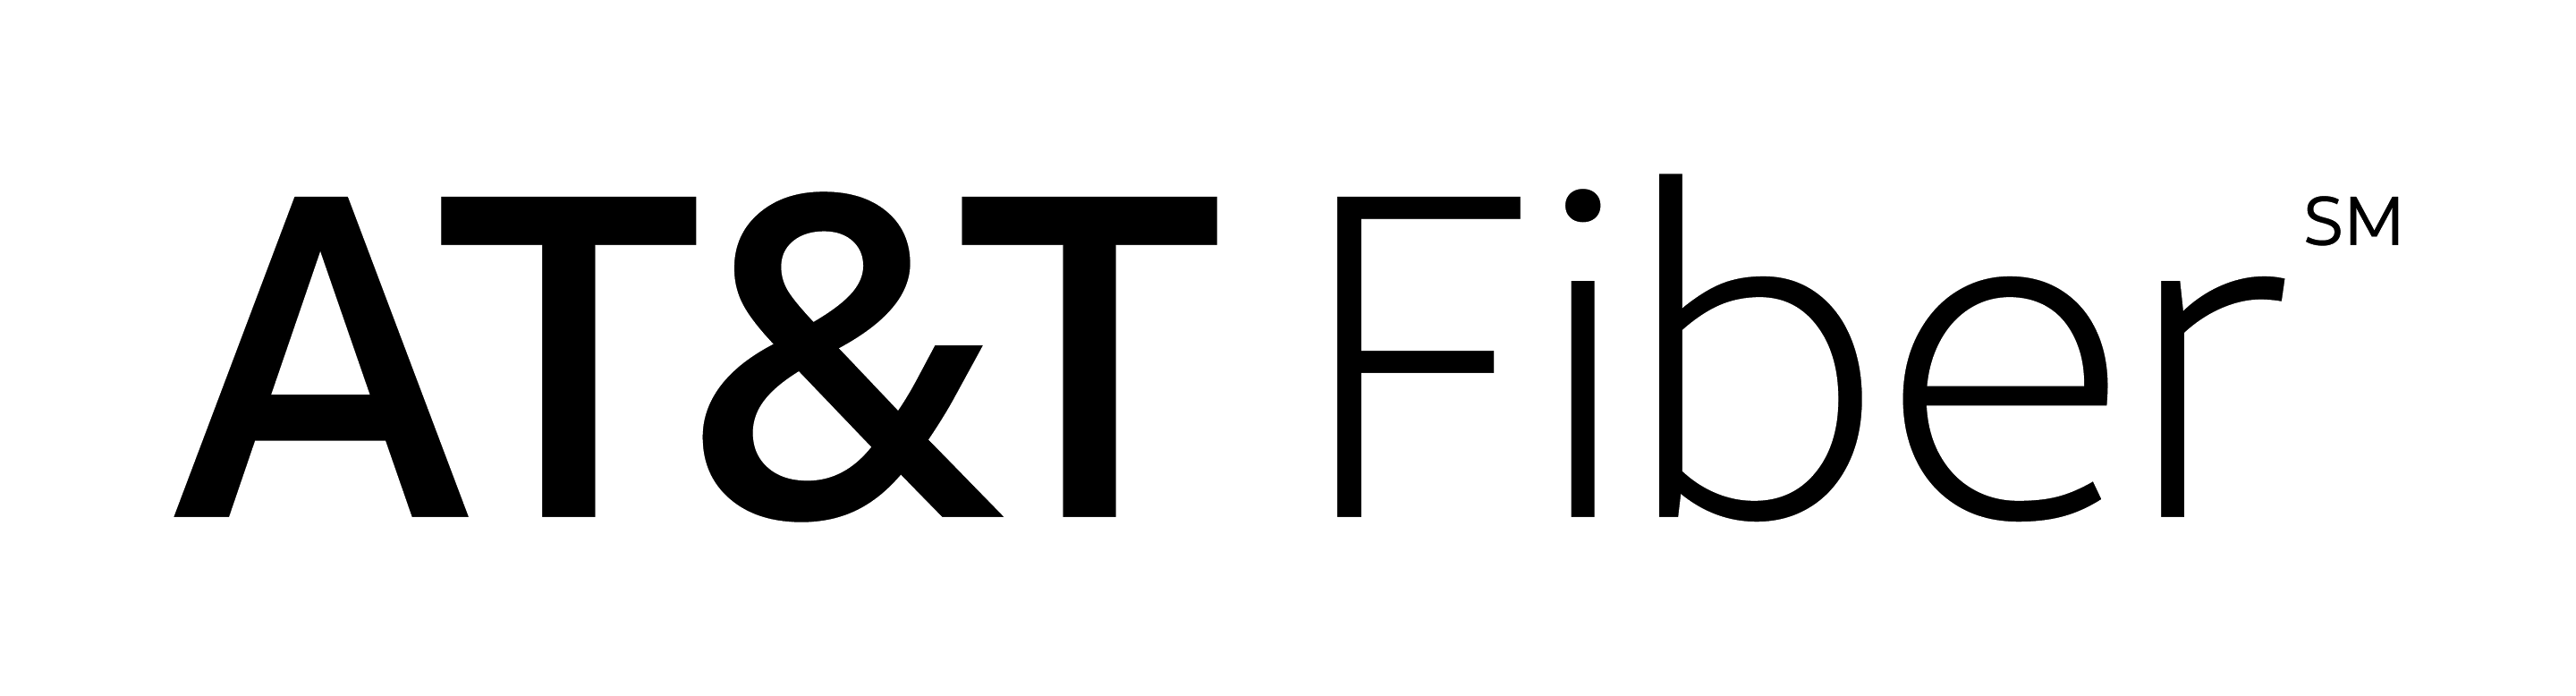 ATandT Logo Transparent Image